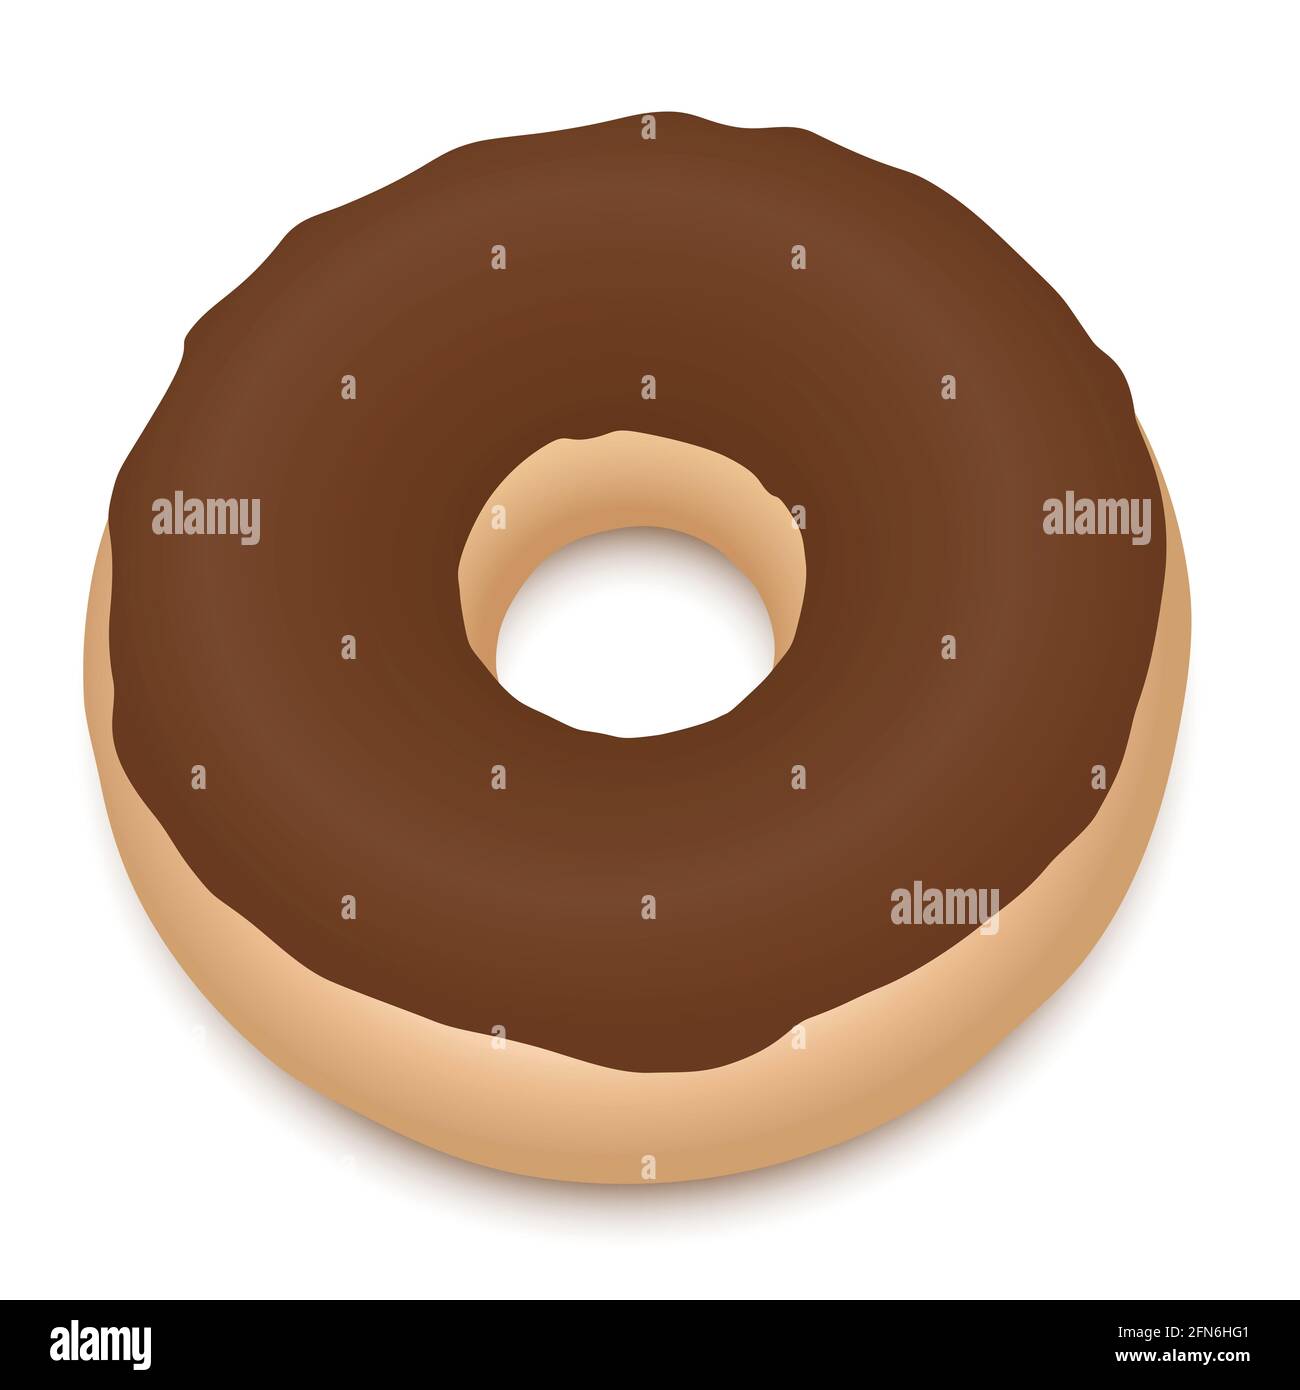 Chocolate donut with dark brown glaze. Yummy illustration on white background. Stock Photo